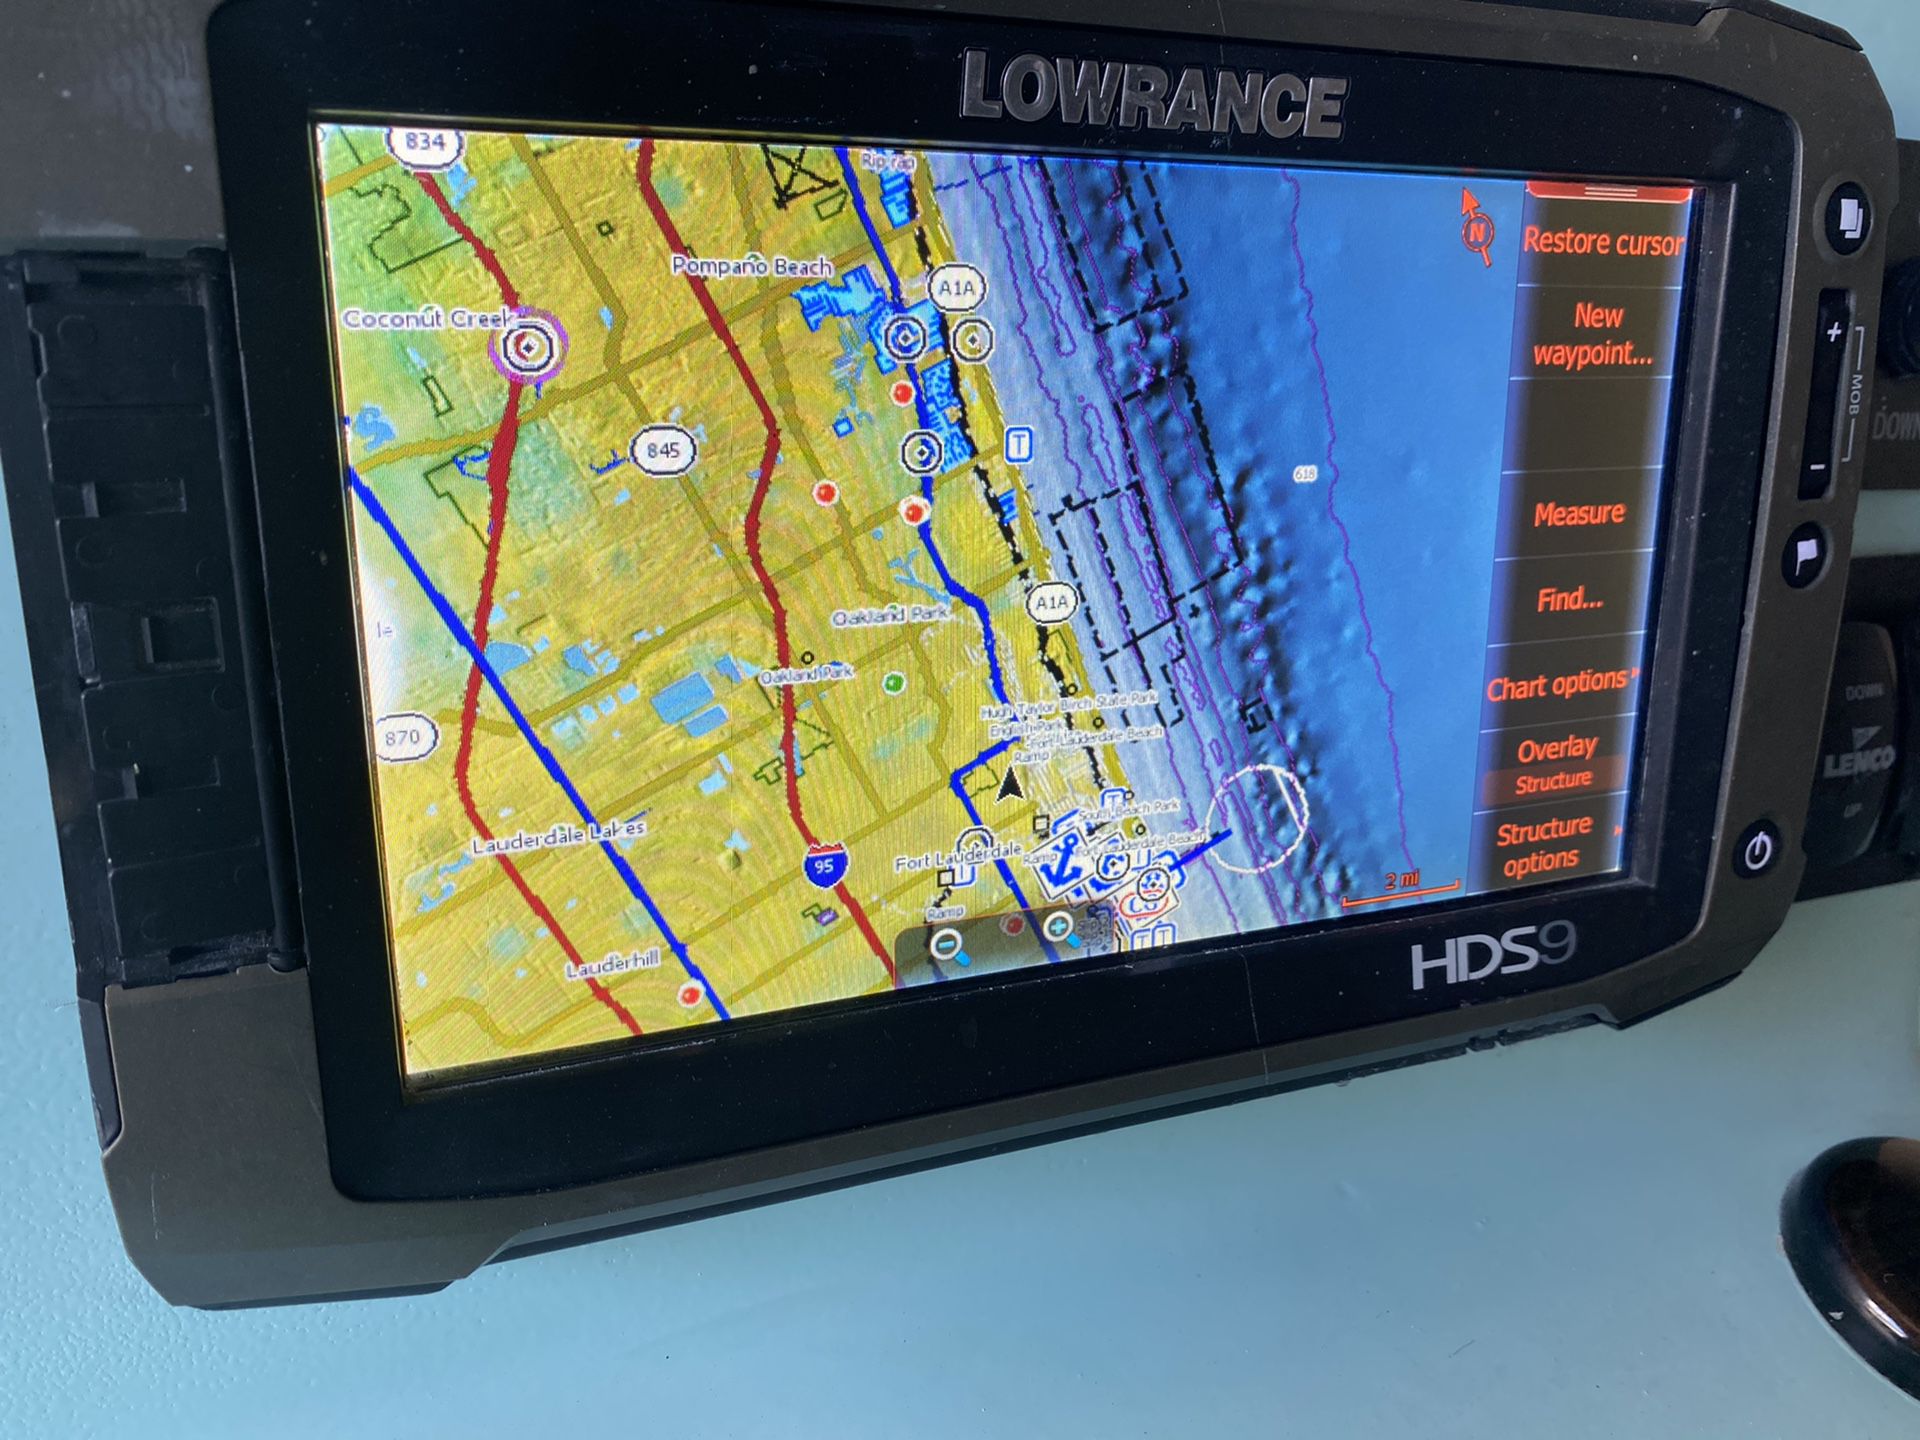 Lowrance HDS9 gen 2 touch screen. Fishing Raymarine Simrad chartplotter